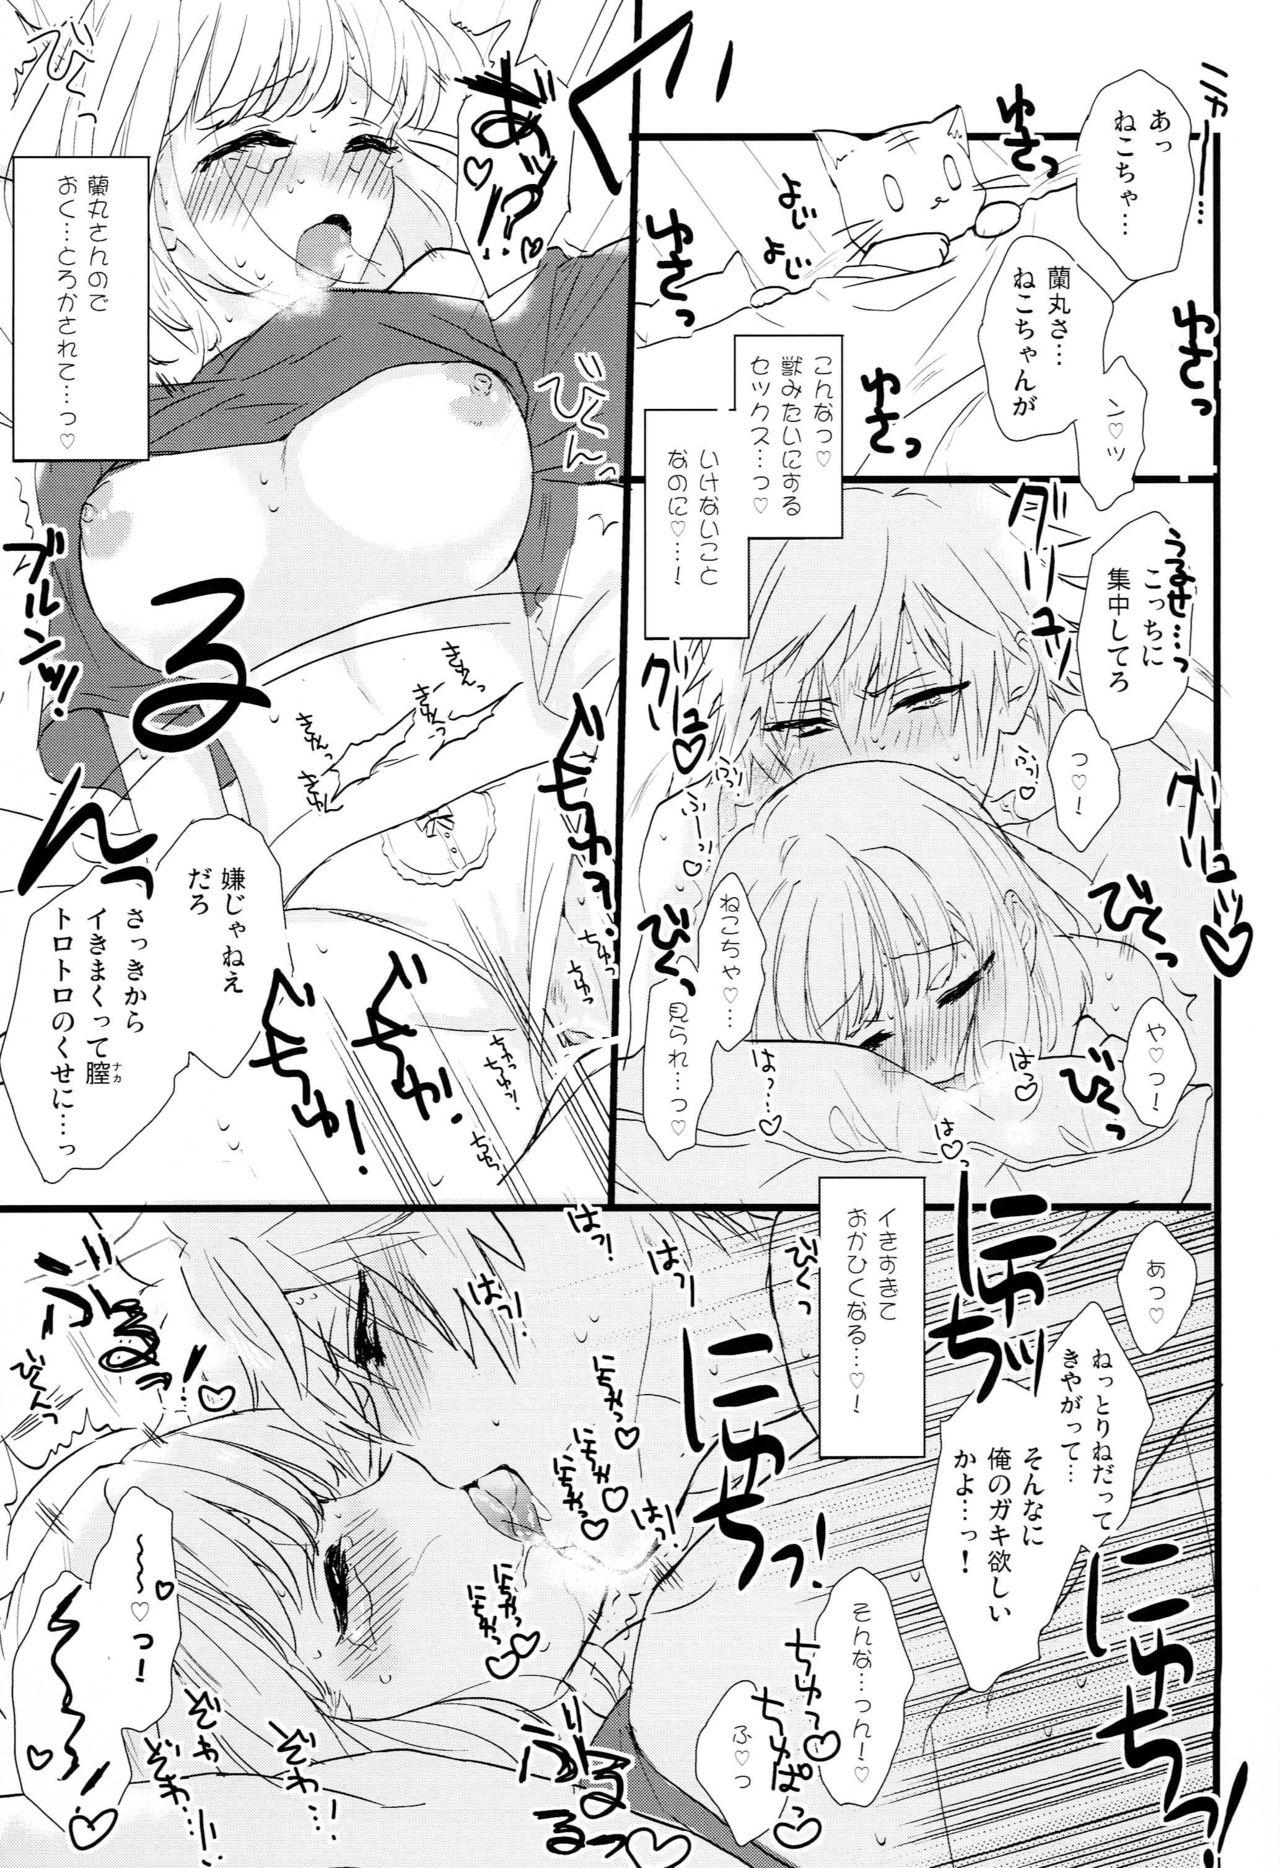 Transgender ICECANDY KISS - Uta no prince-sama Maid - Page 8